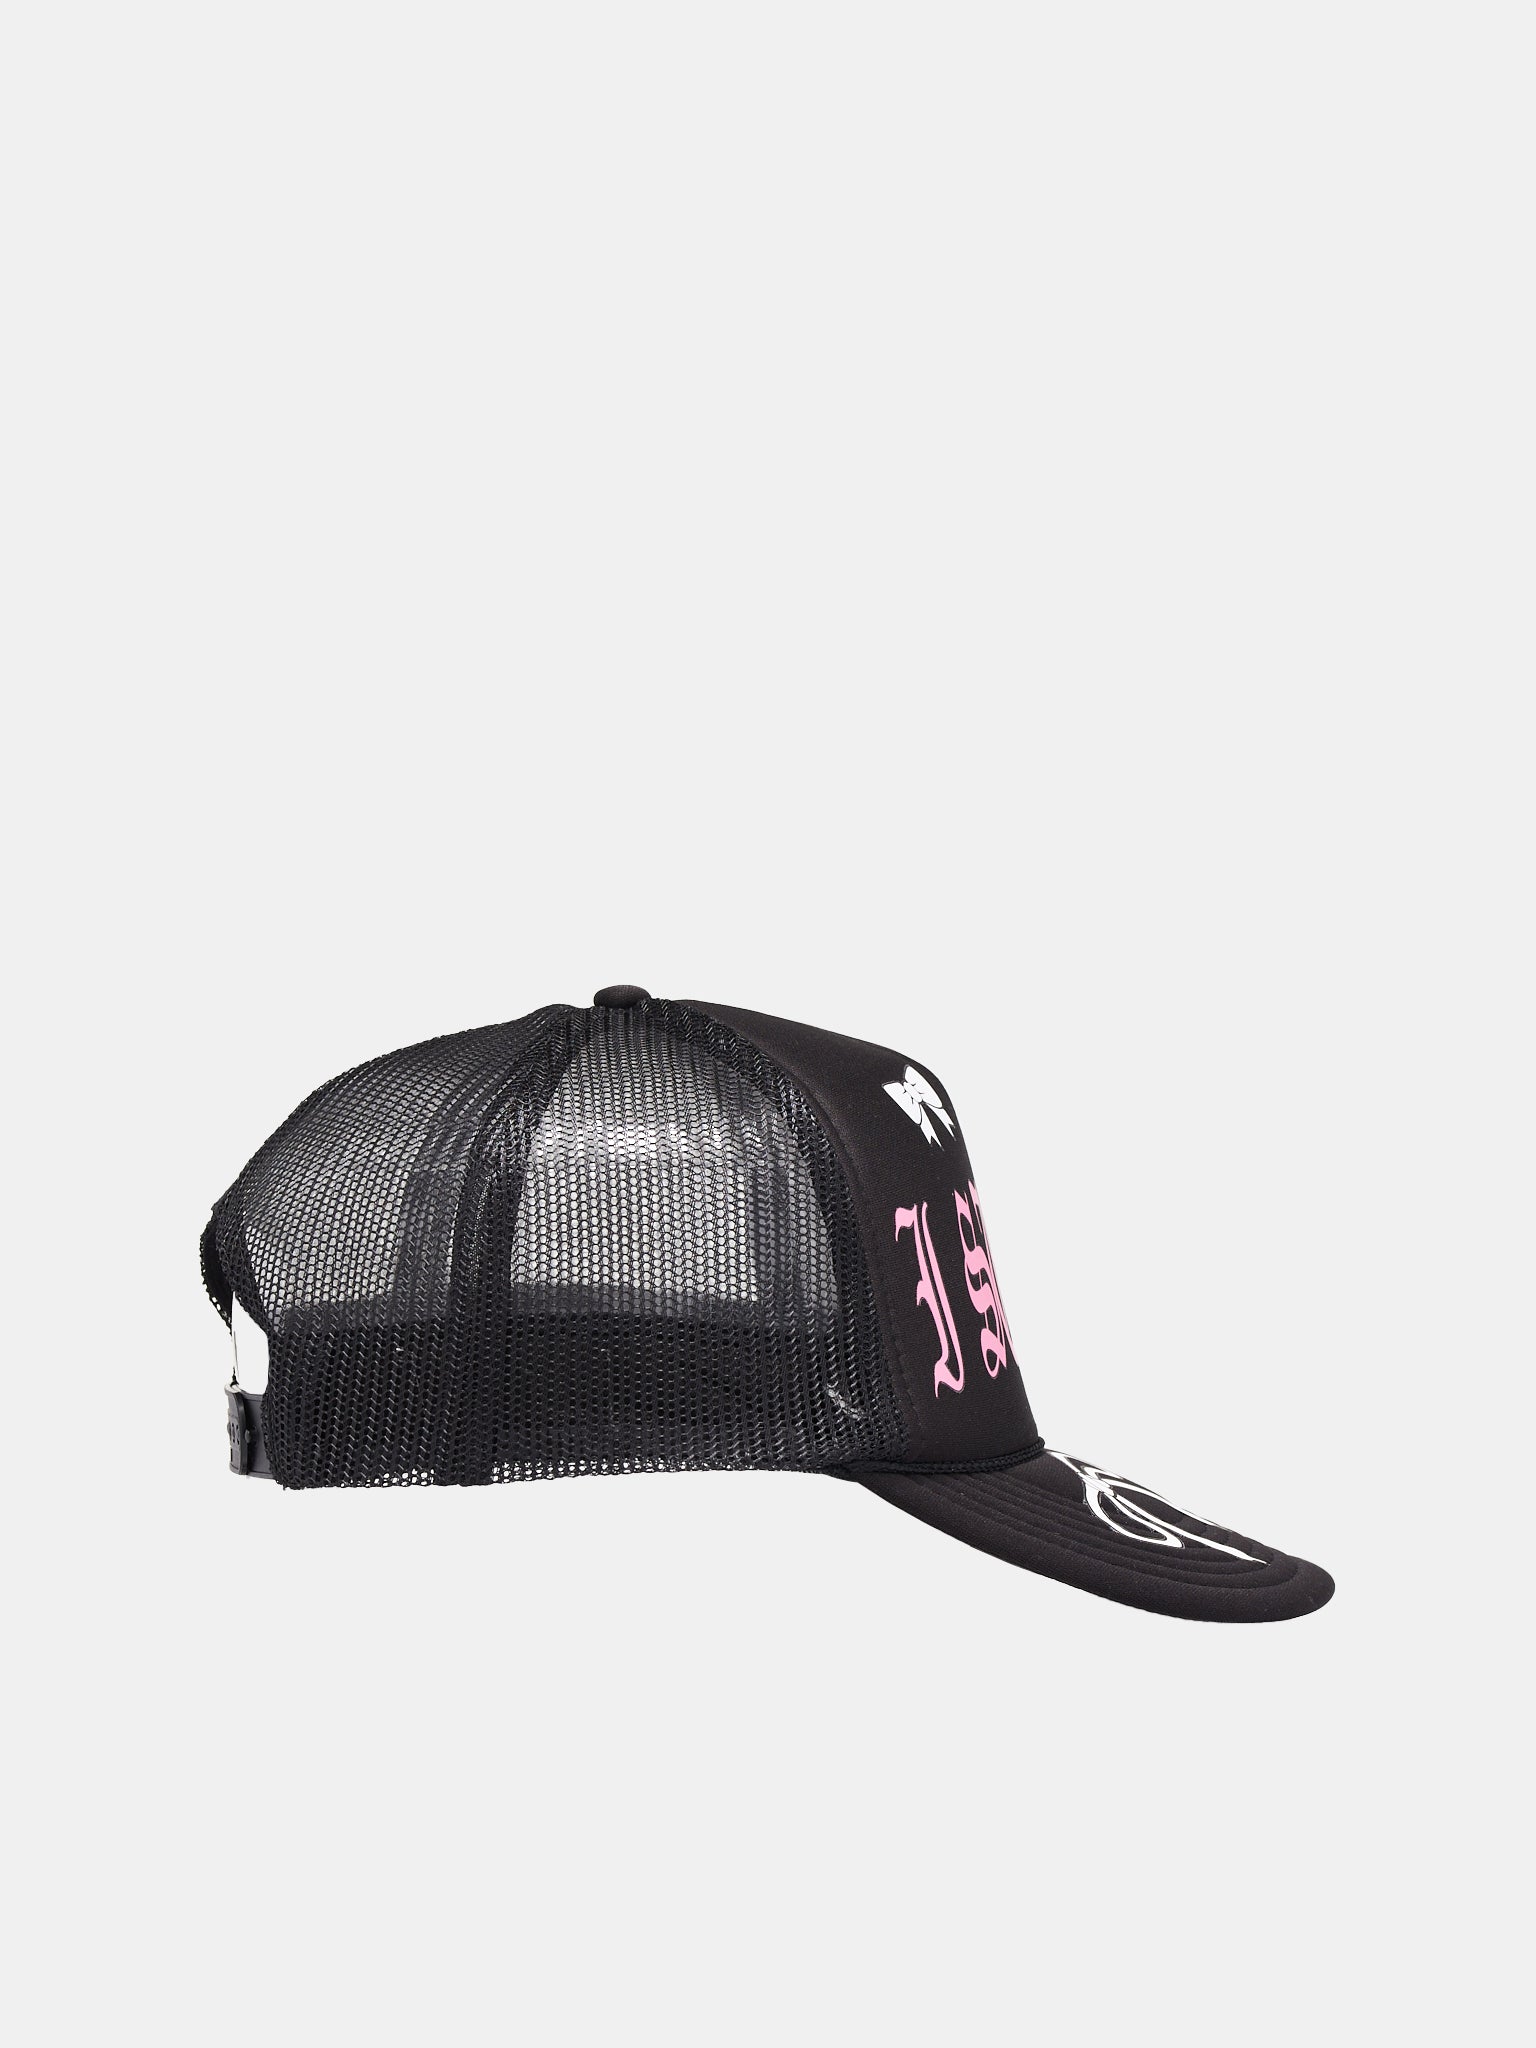 Suffer Trucker Hat (149-BLACK-PINK-FONT-WHITE-BOWS)